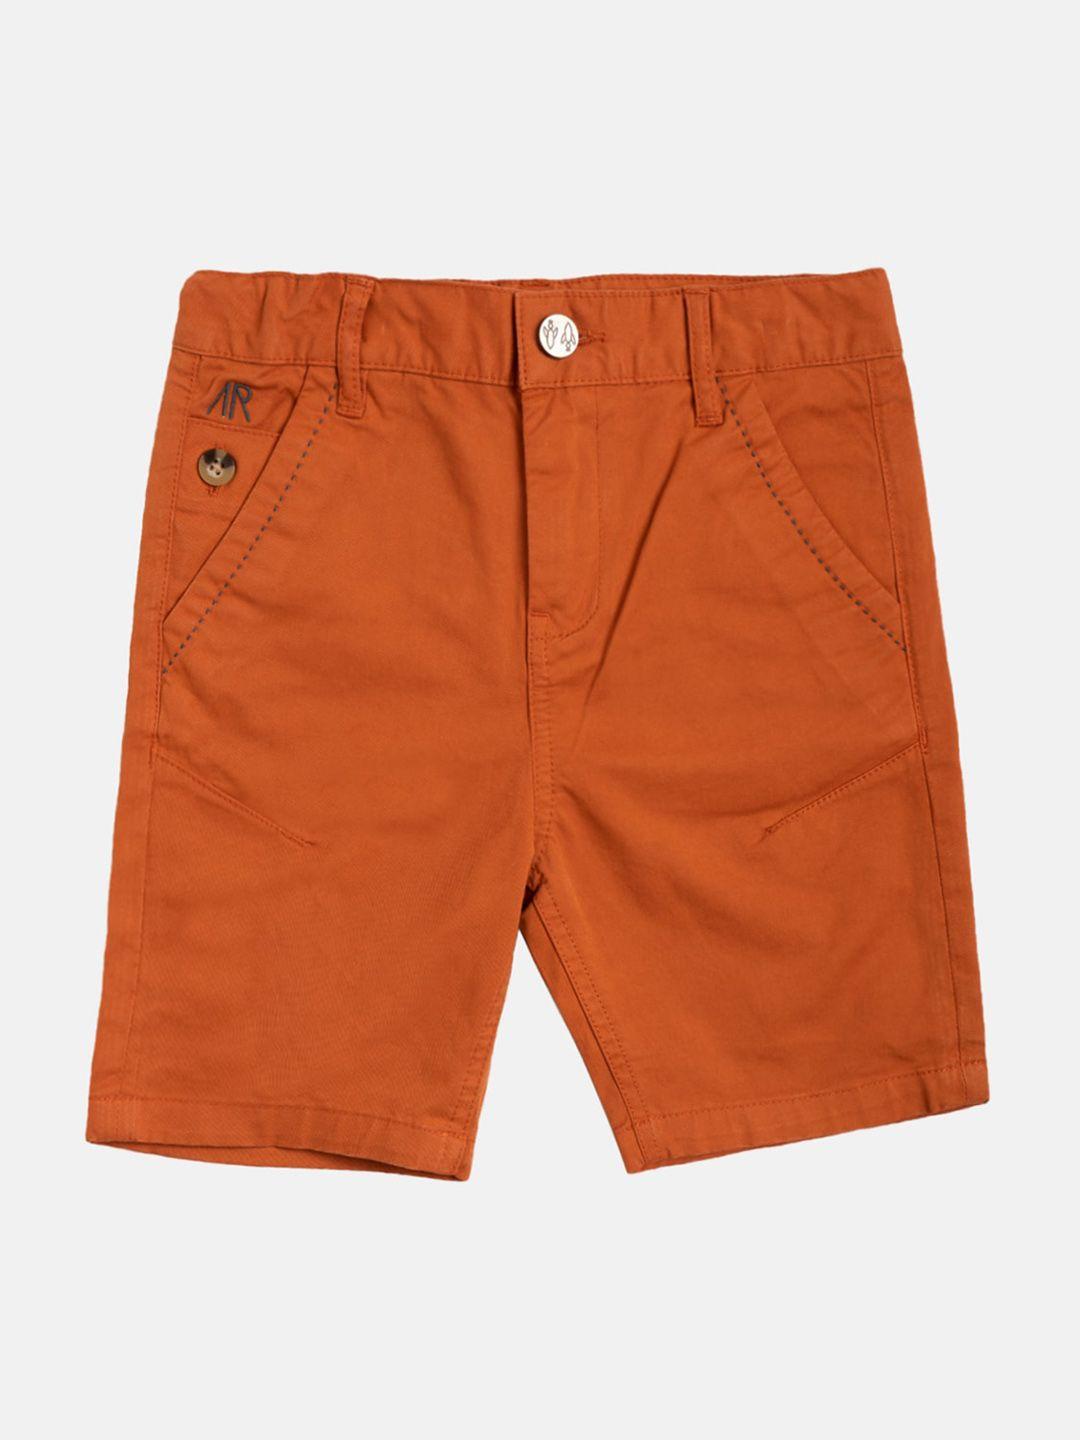 angel & rocket boys rust orange solid shorts